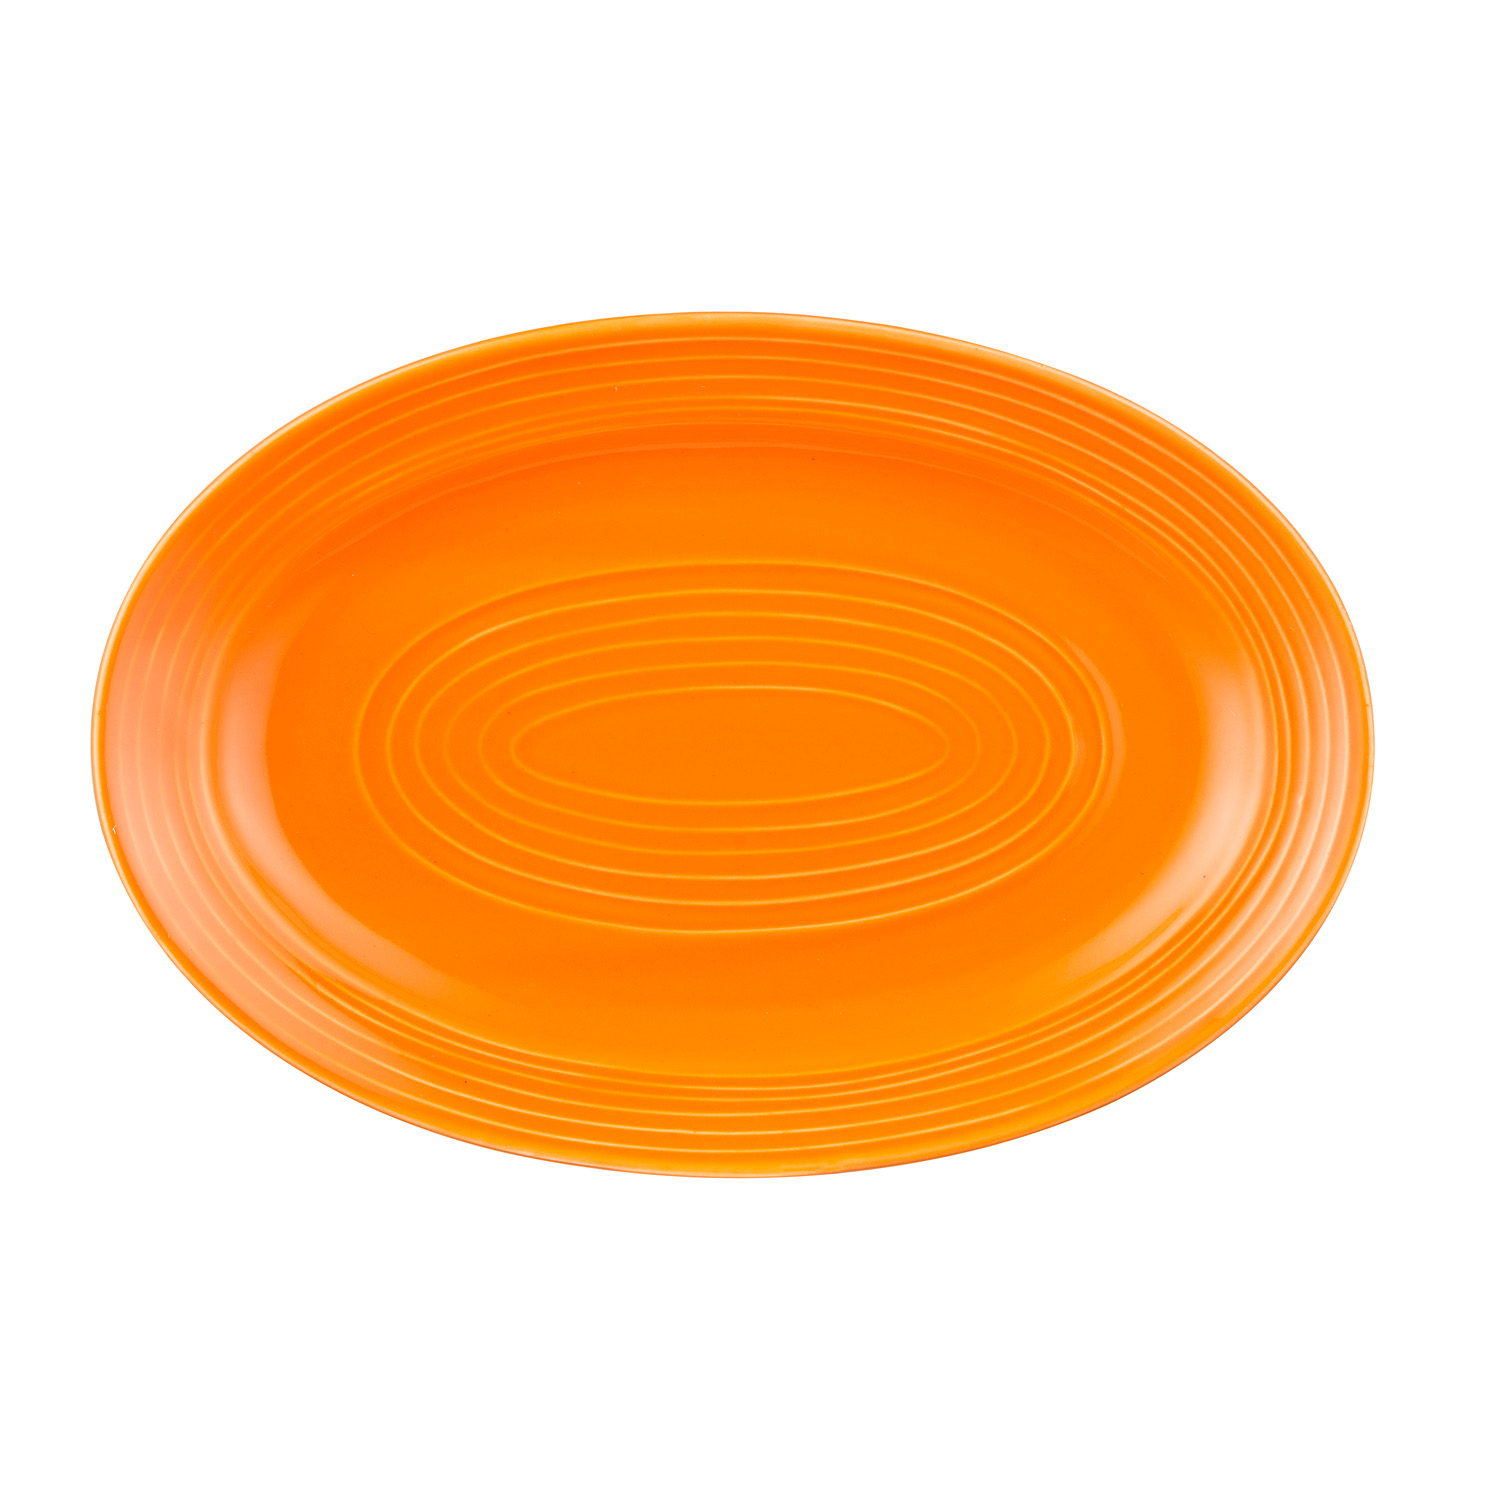 CAC China TG-14-TNG Tango Embossed Porcelain Tangerine Oval Platter 13 5/8"  - 1 dozen